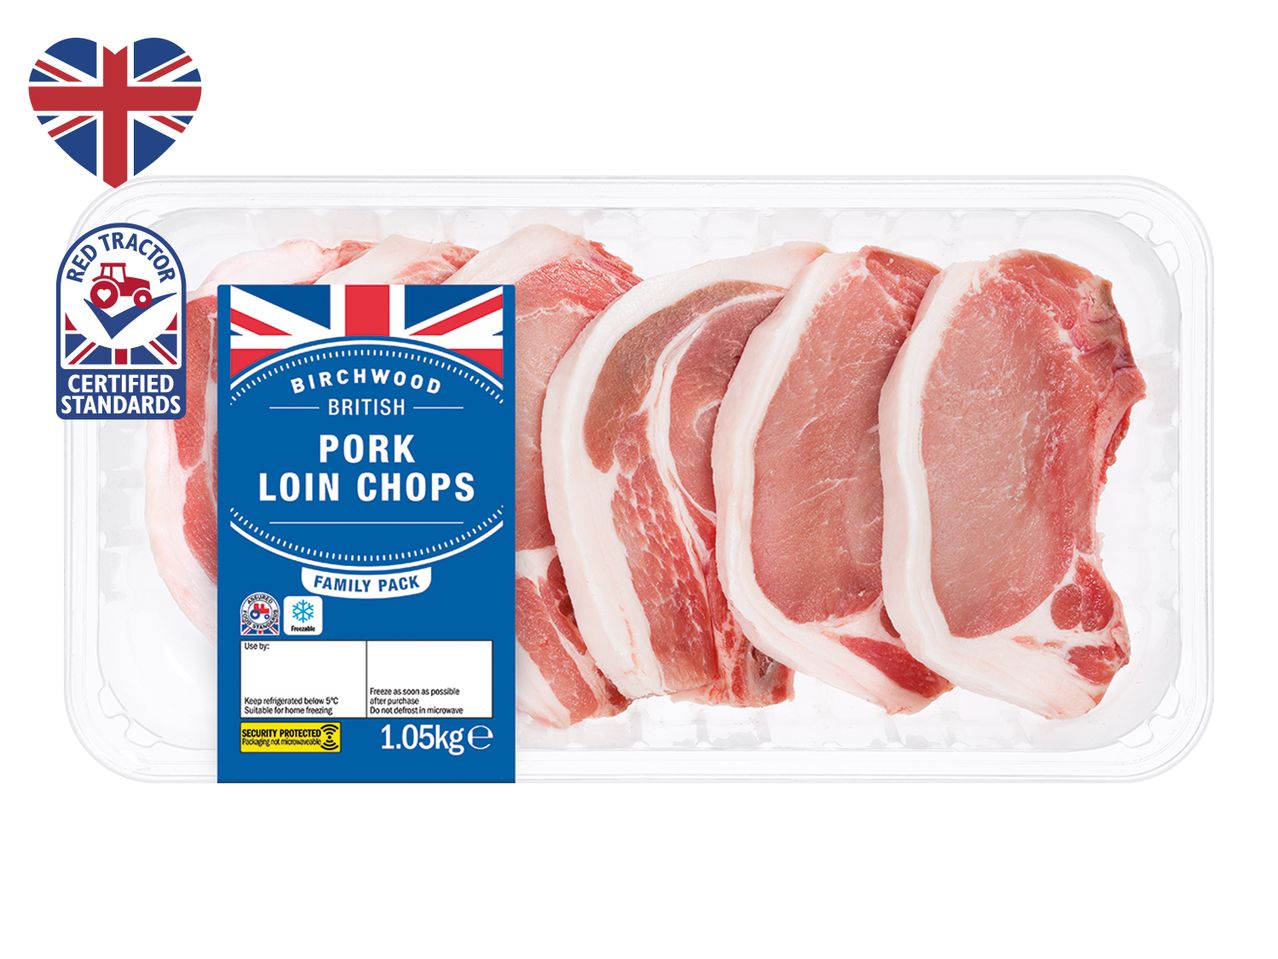 Go to full screen view: Birchwood British Pork Loin Chops - Image 1